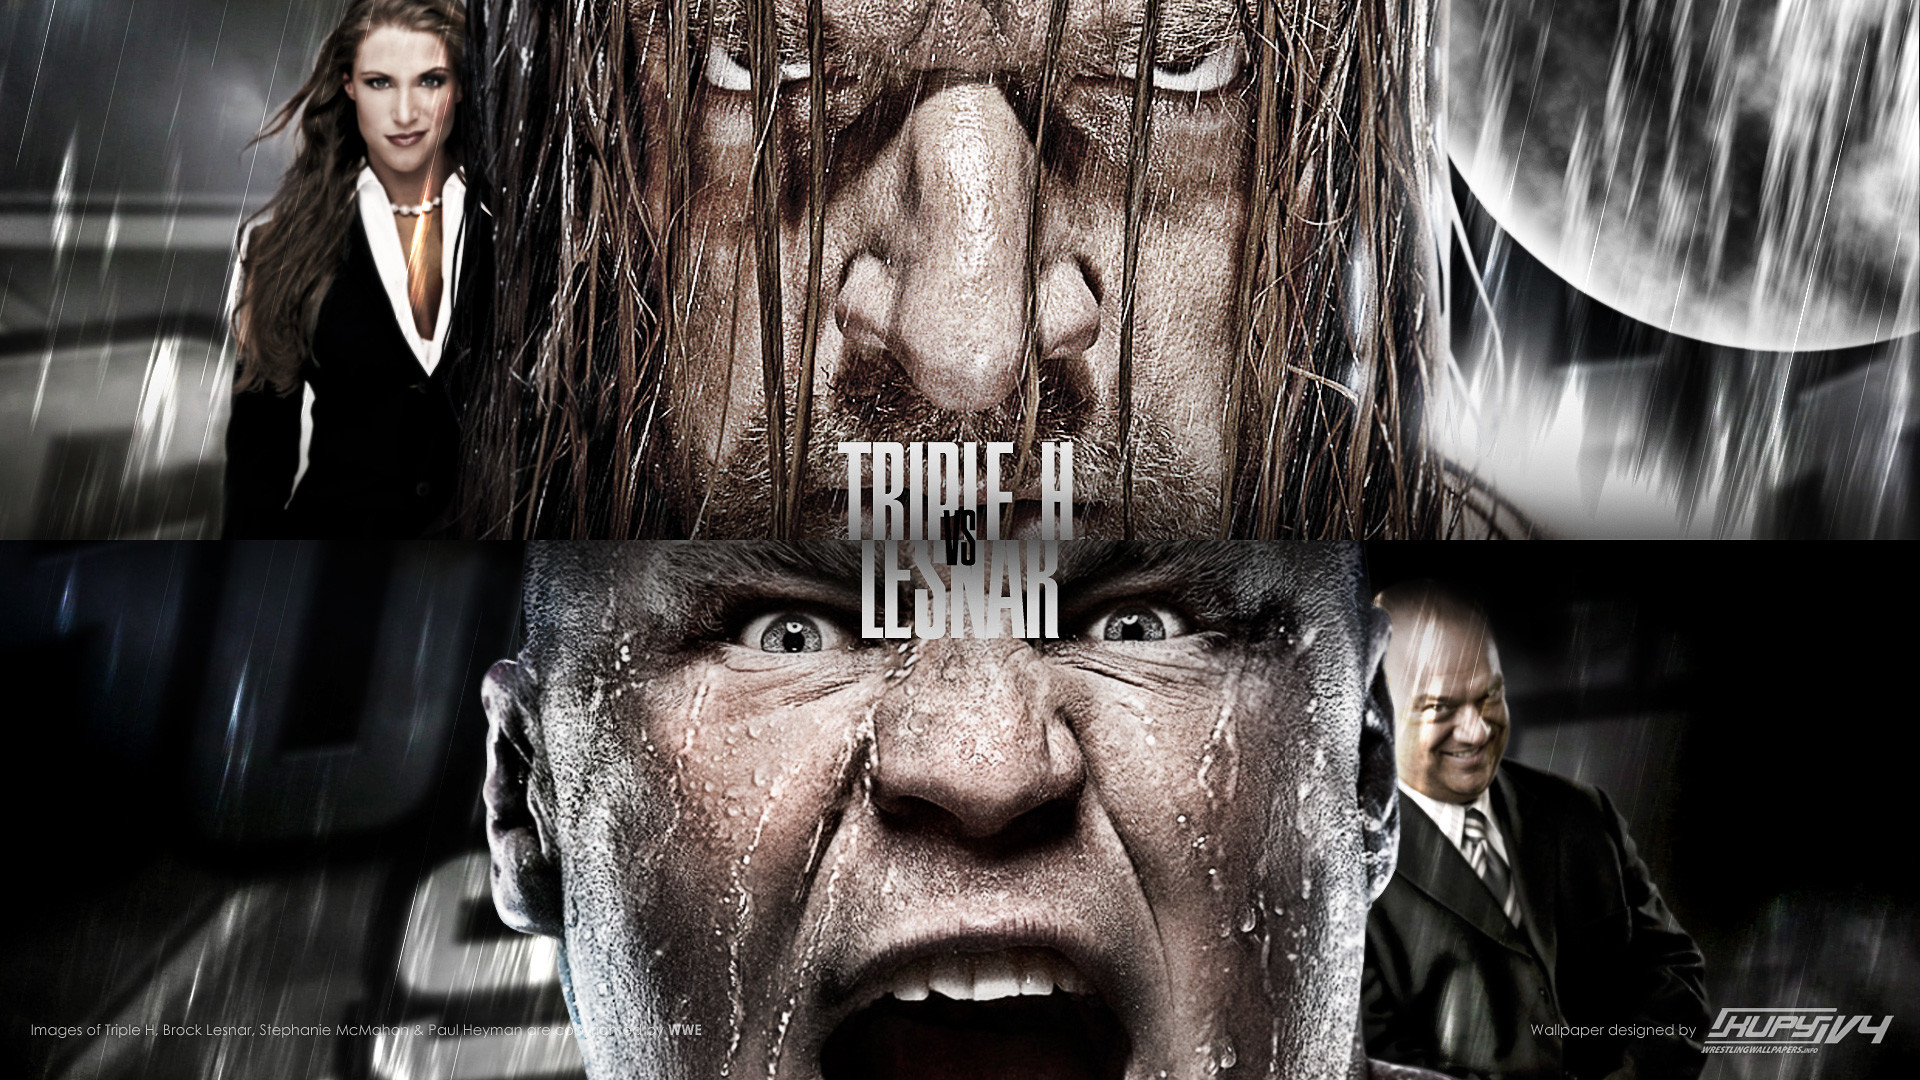 1920x1080 WWE SummerSlam 2012: Triple H vs. Brock Lesnar wallpaper 1920Ã1200 |  1920Ã1080 ...